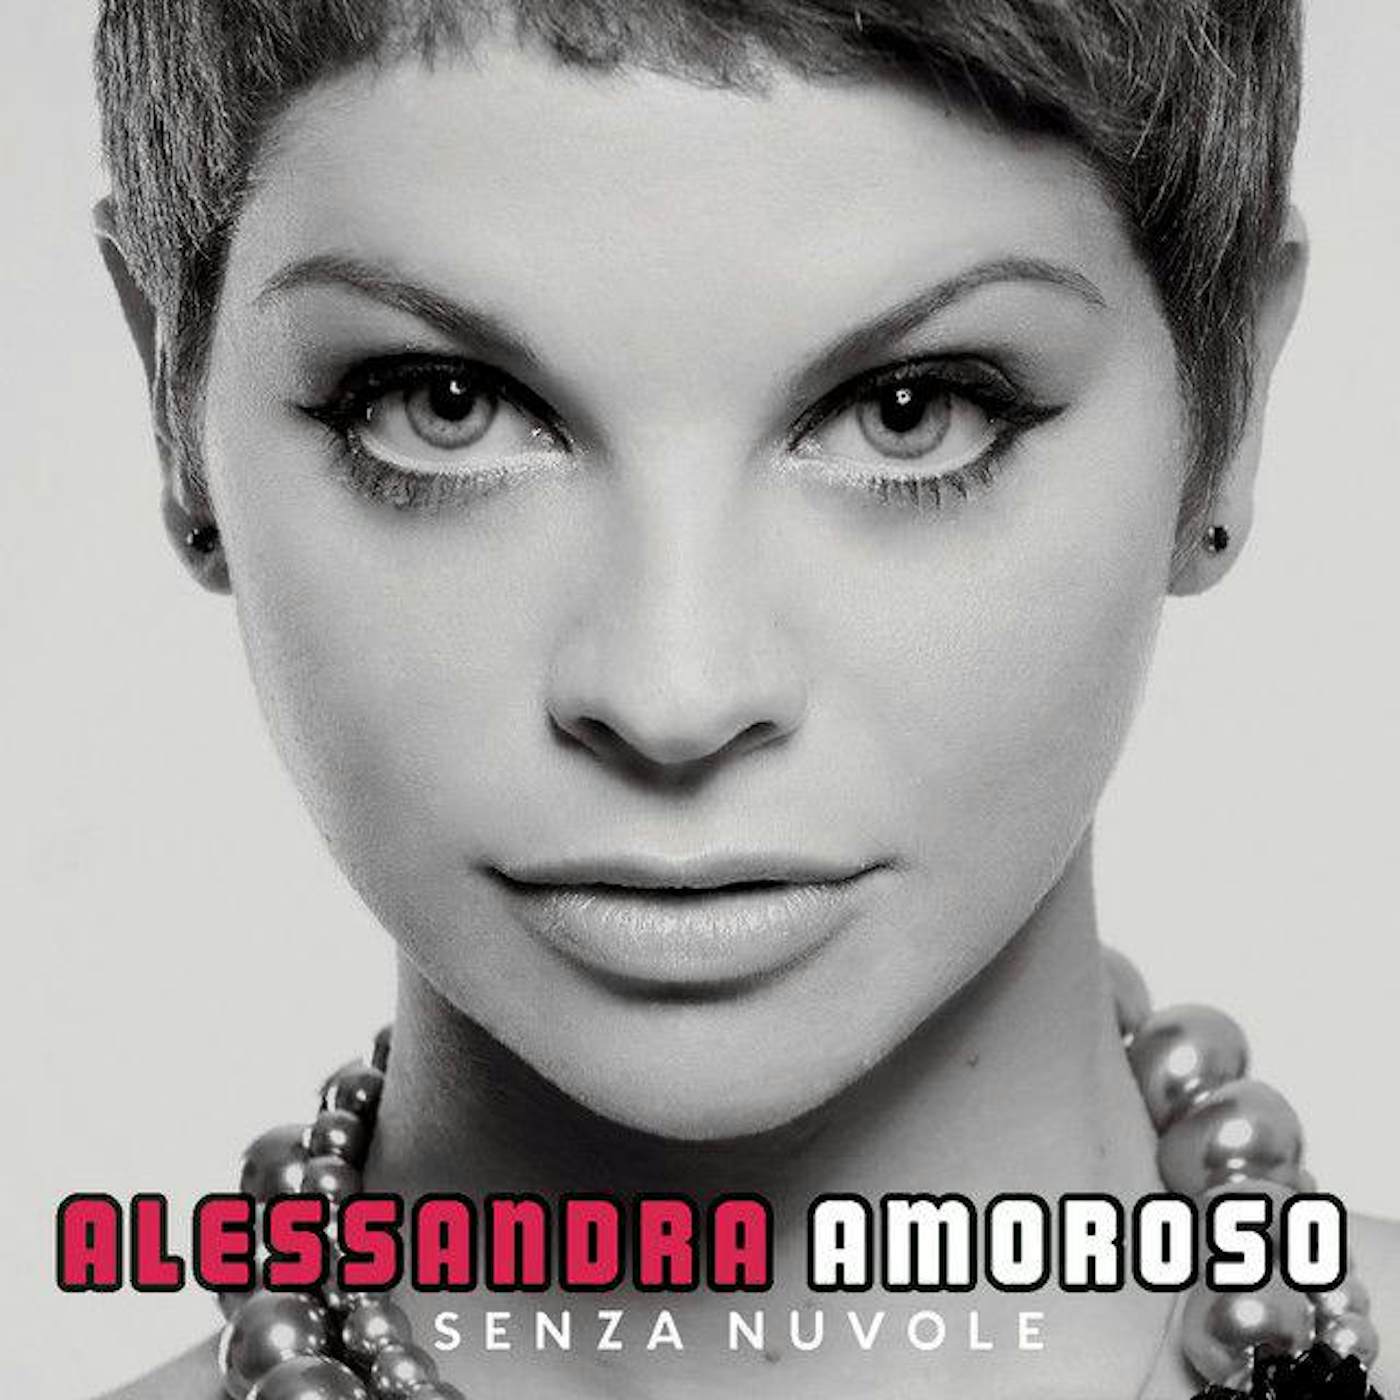 Alessandra Amoroso Senza Nuvole (White) Vinyl Record